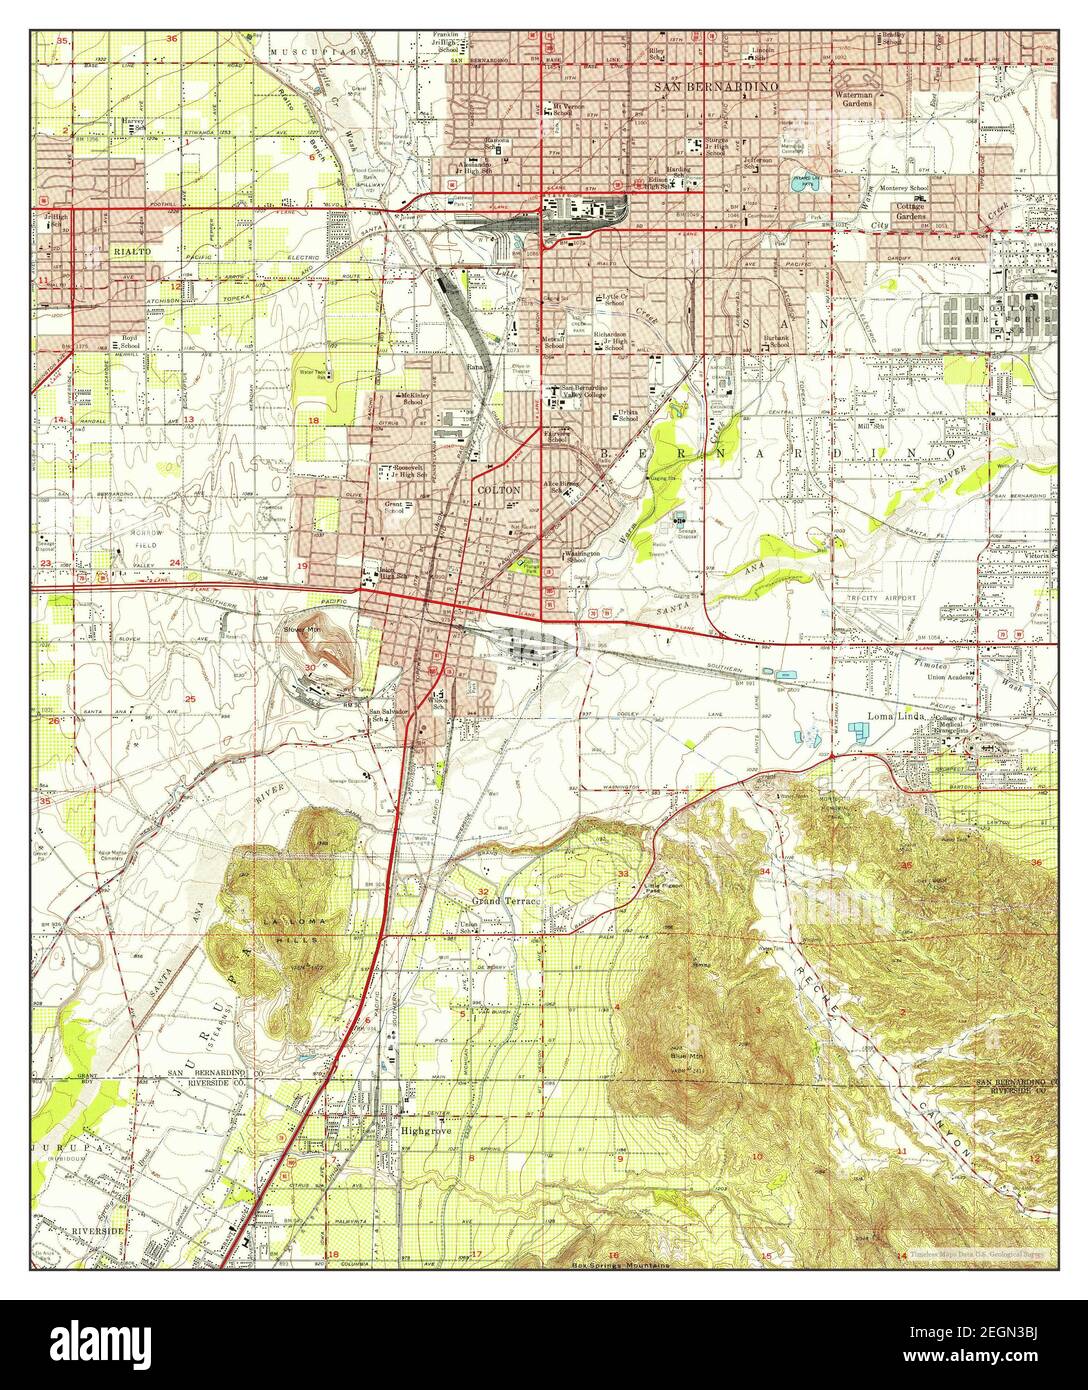 San Bernardino South, California, map 1954, 1:24000, United States of America by Timeless Maps, data U.S. Geological Survey Foto Stock